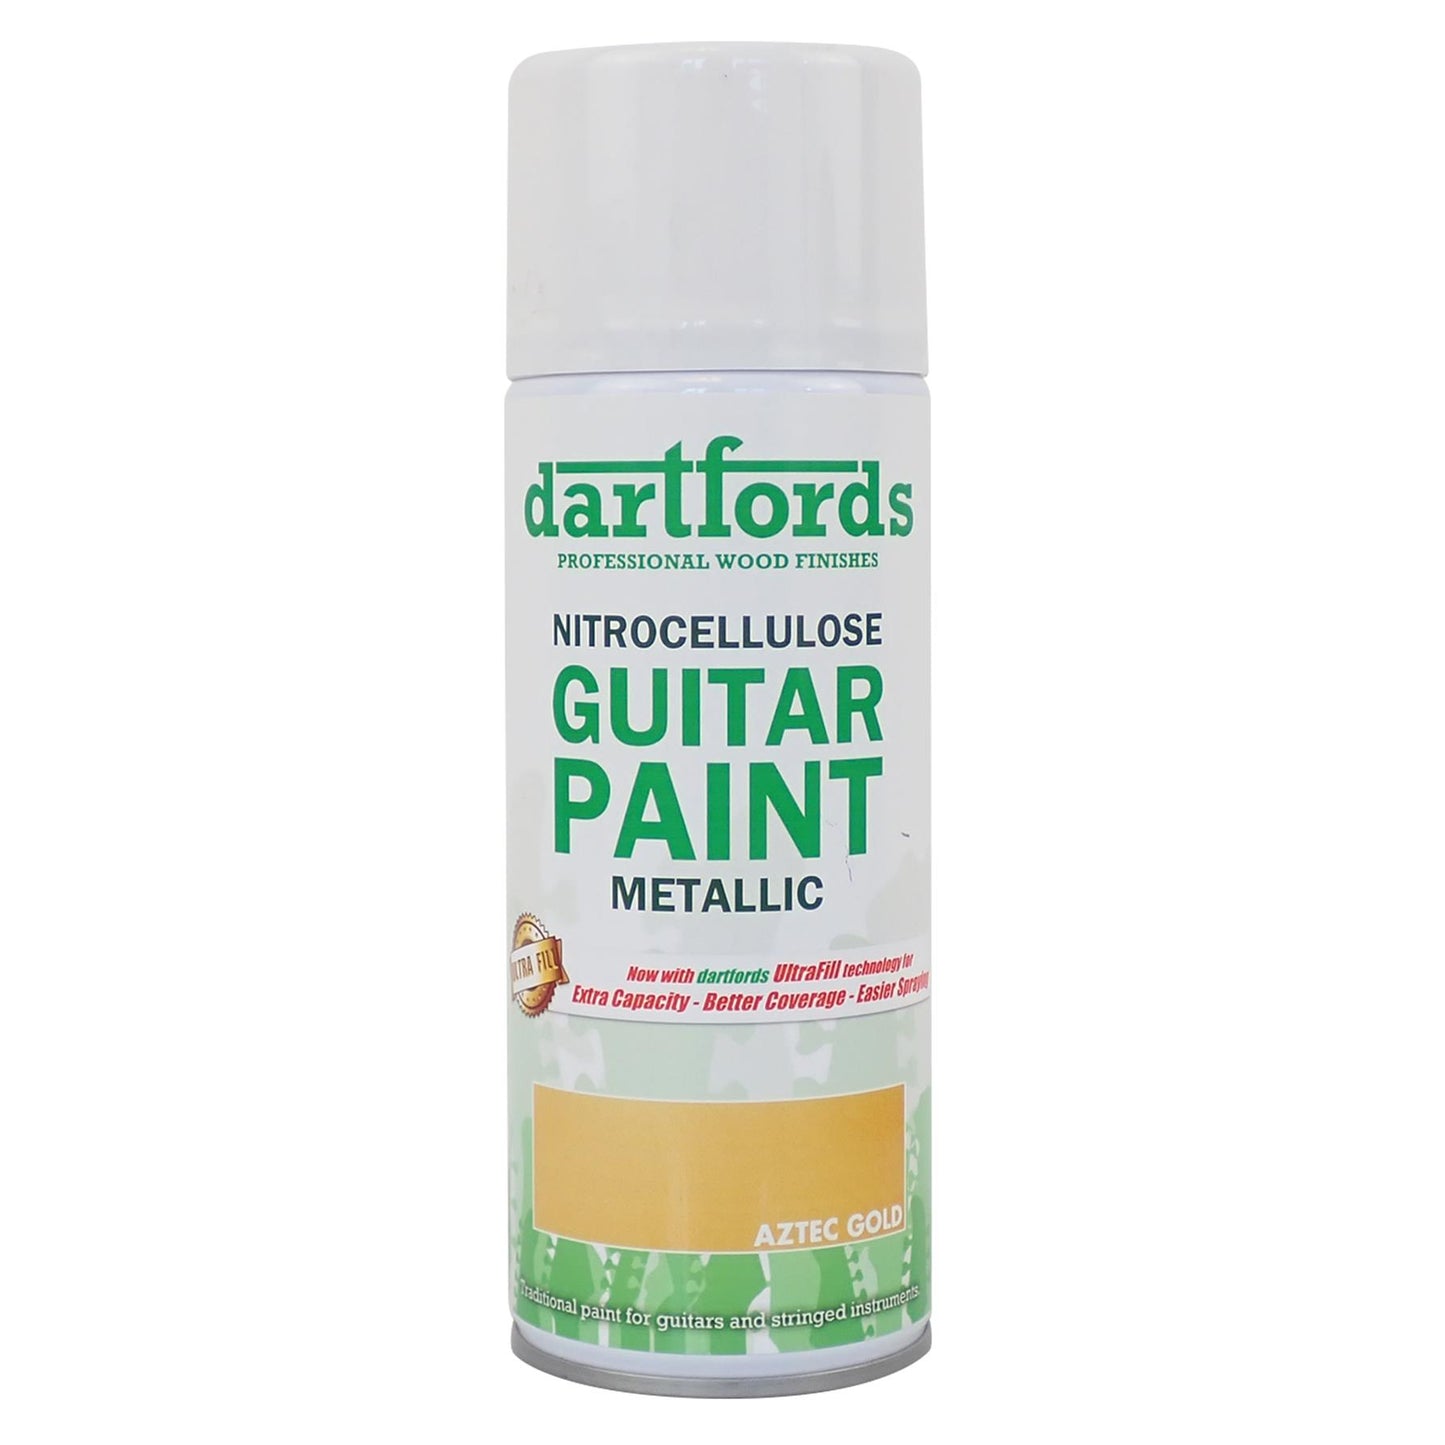 dartfords Aztec Gold Metallic Nitrocellulose Guitar Paint - 400ml Aerosol